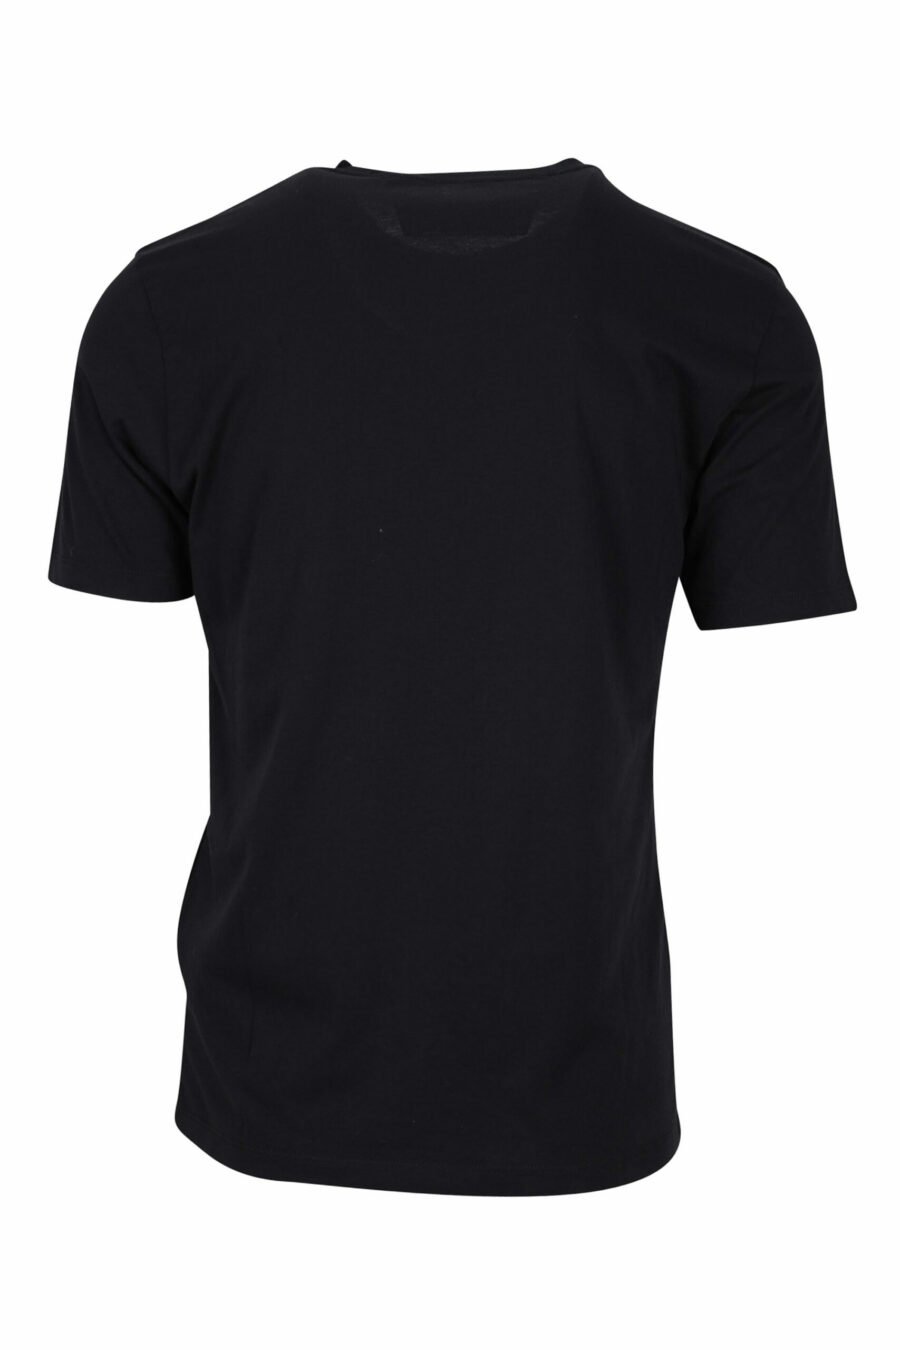 Camiseta negra con maxilogo gráfico - 7620943572964 1 scaled